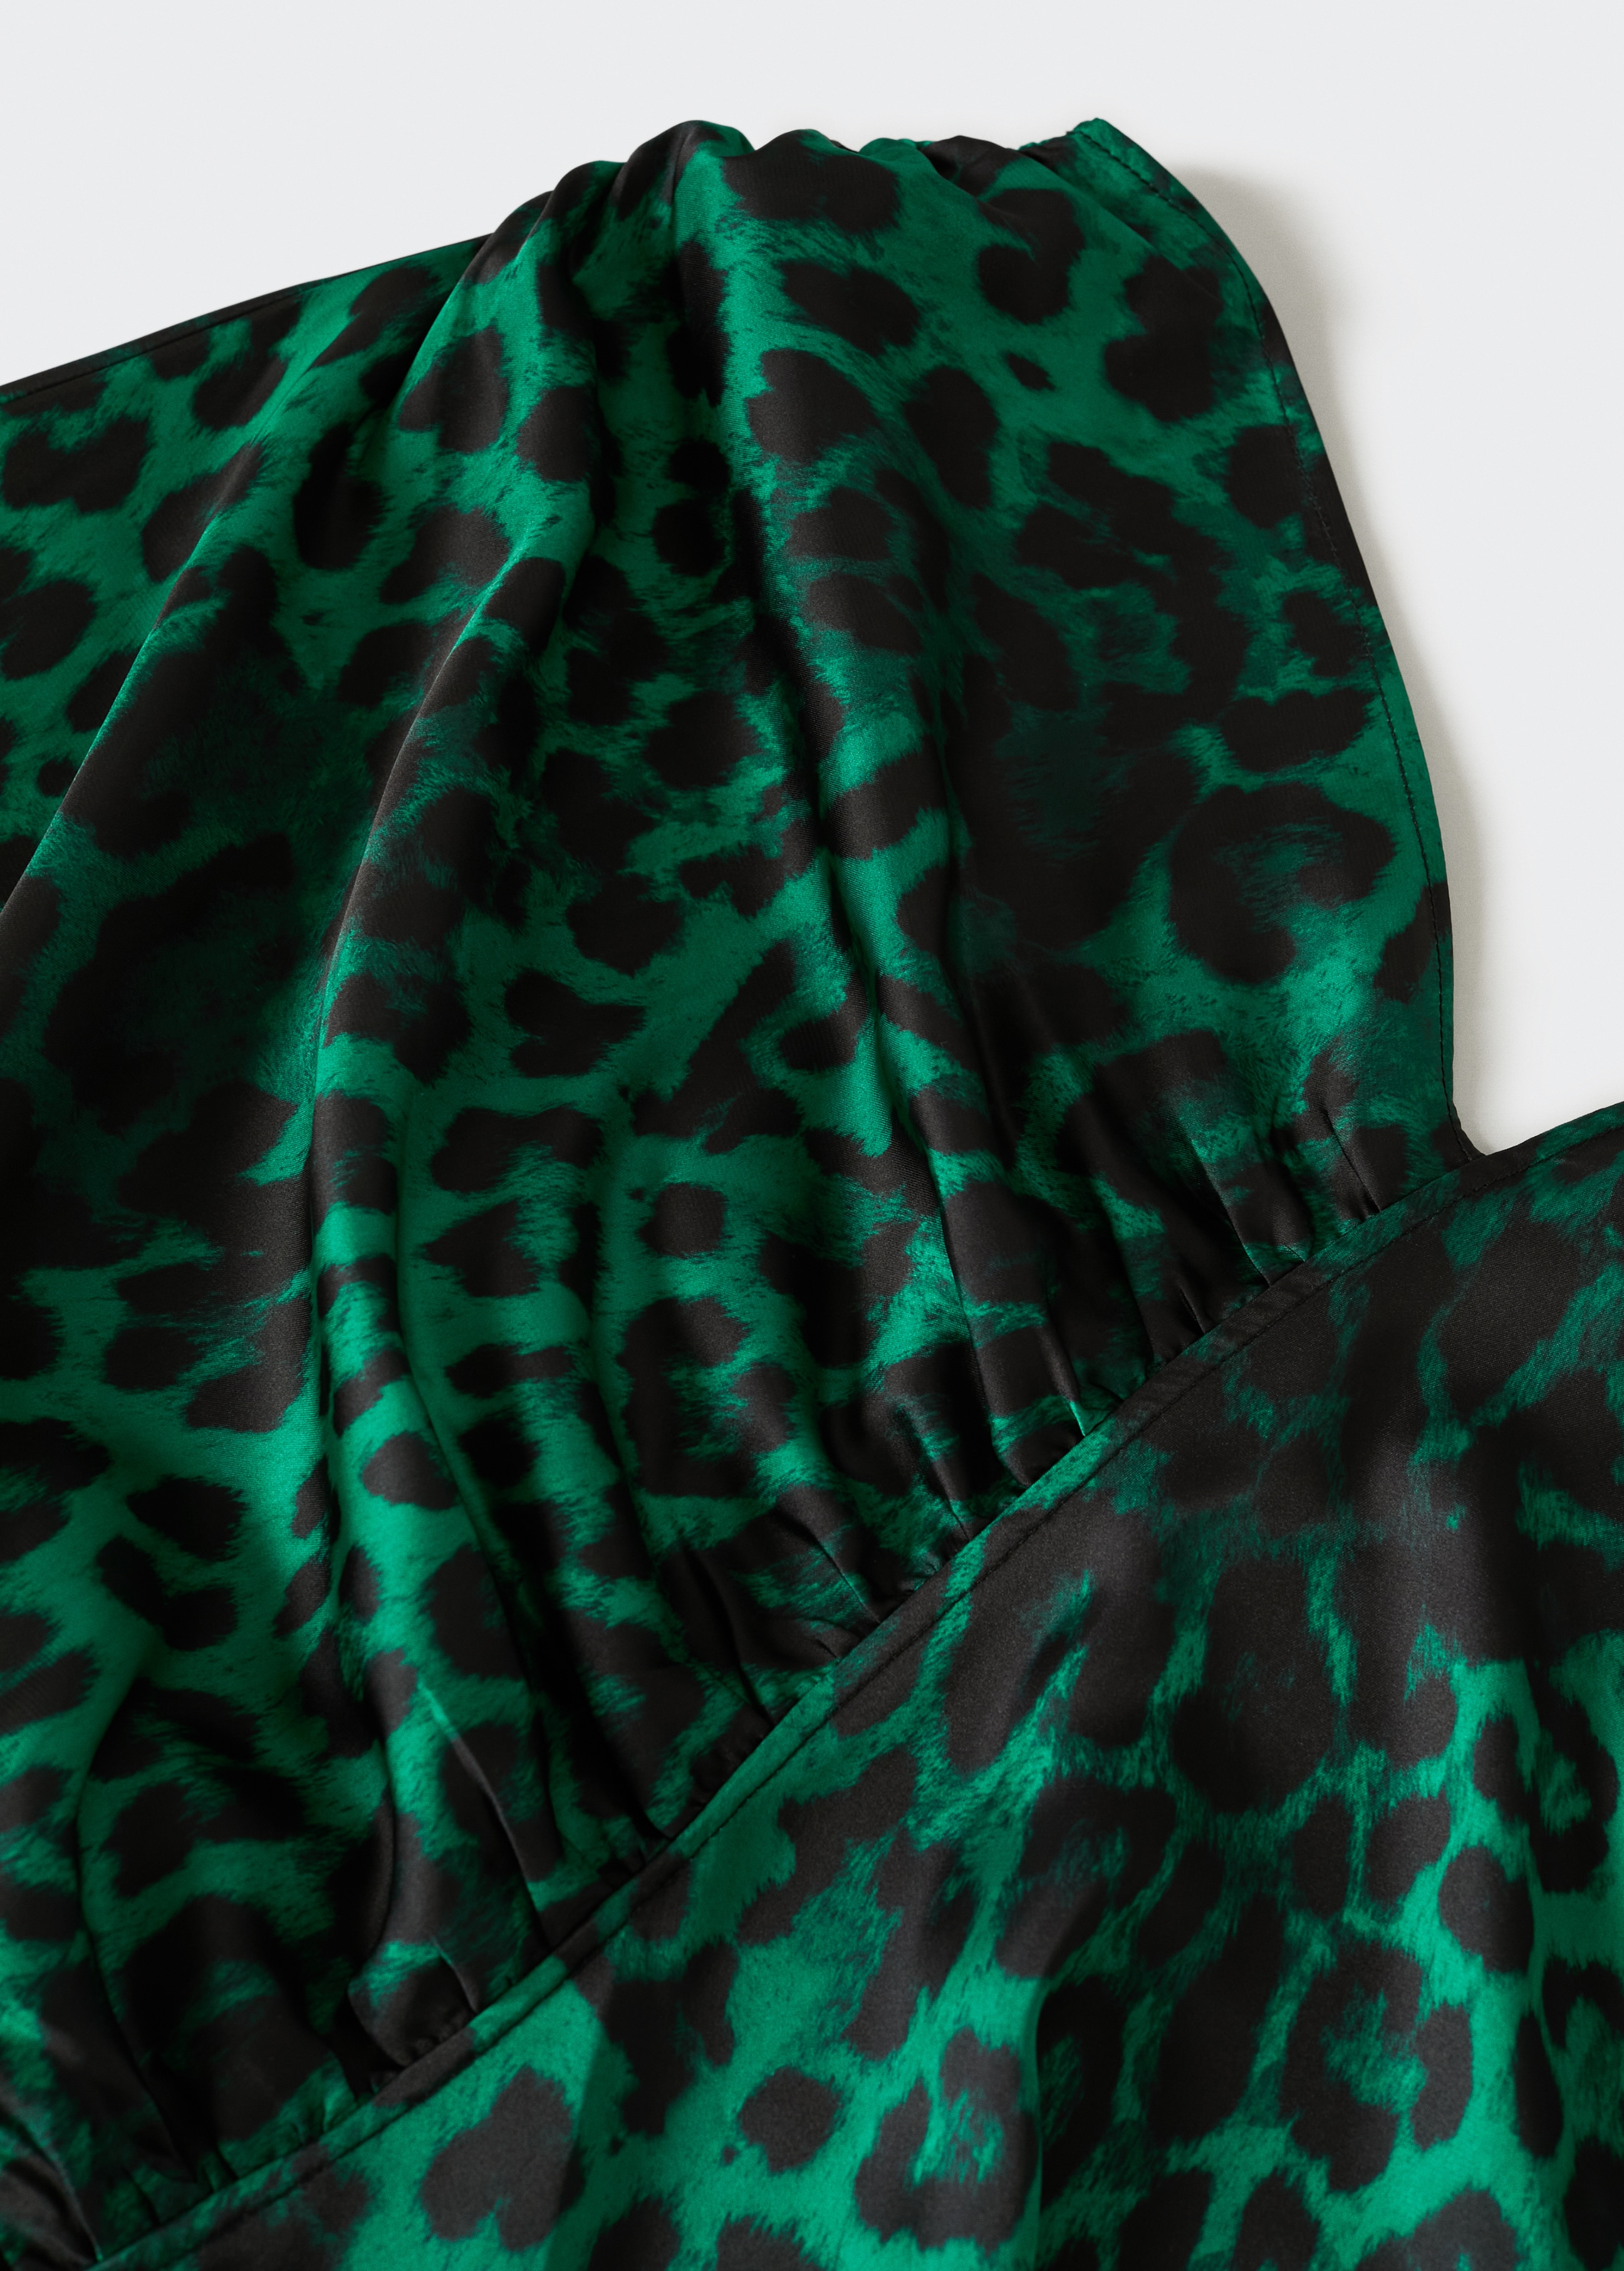 Leopard-print fluid dress - Details of the article 8